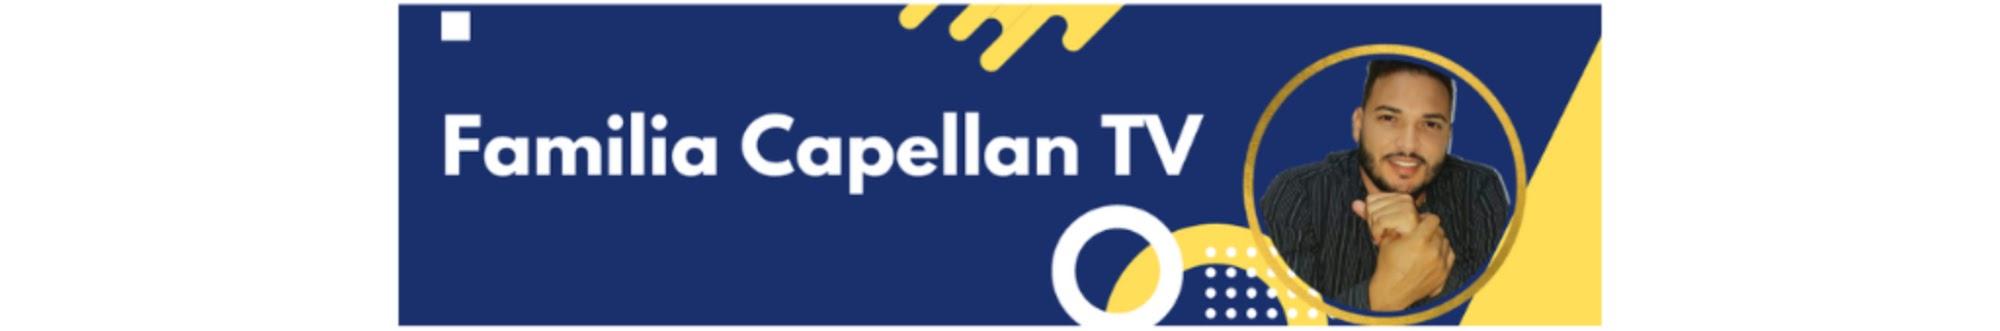 Familia Capellan TV